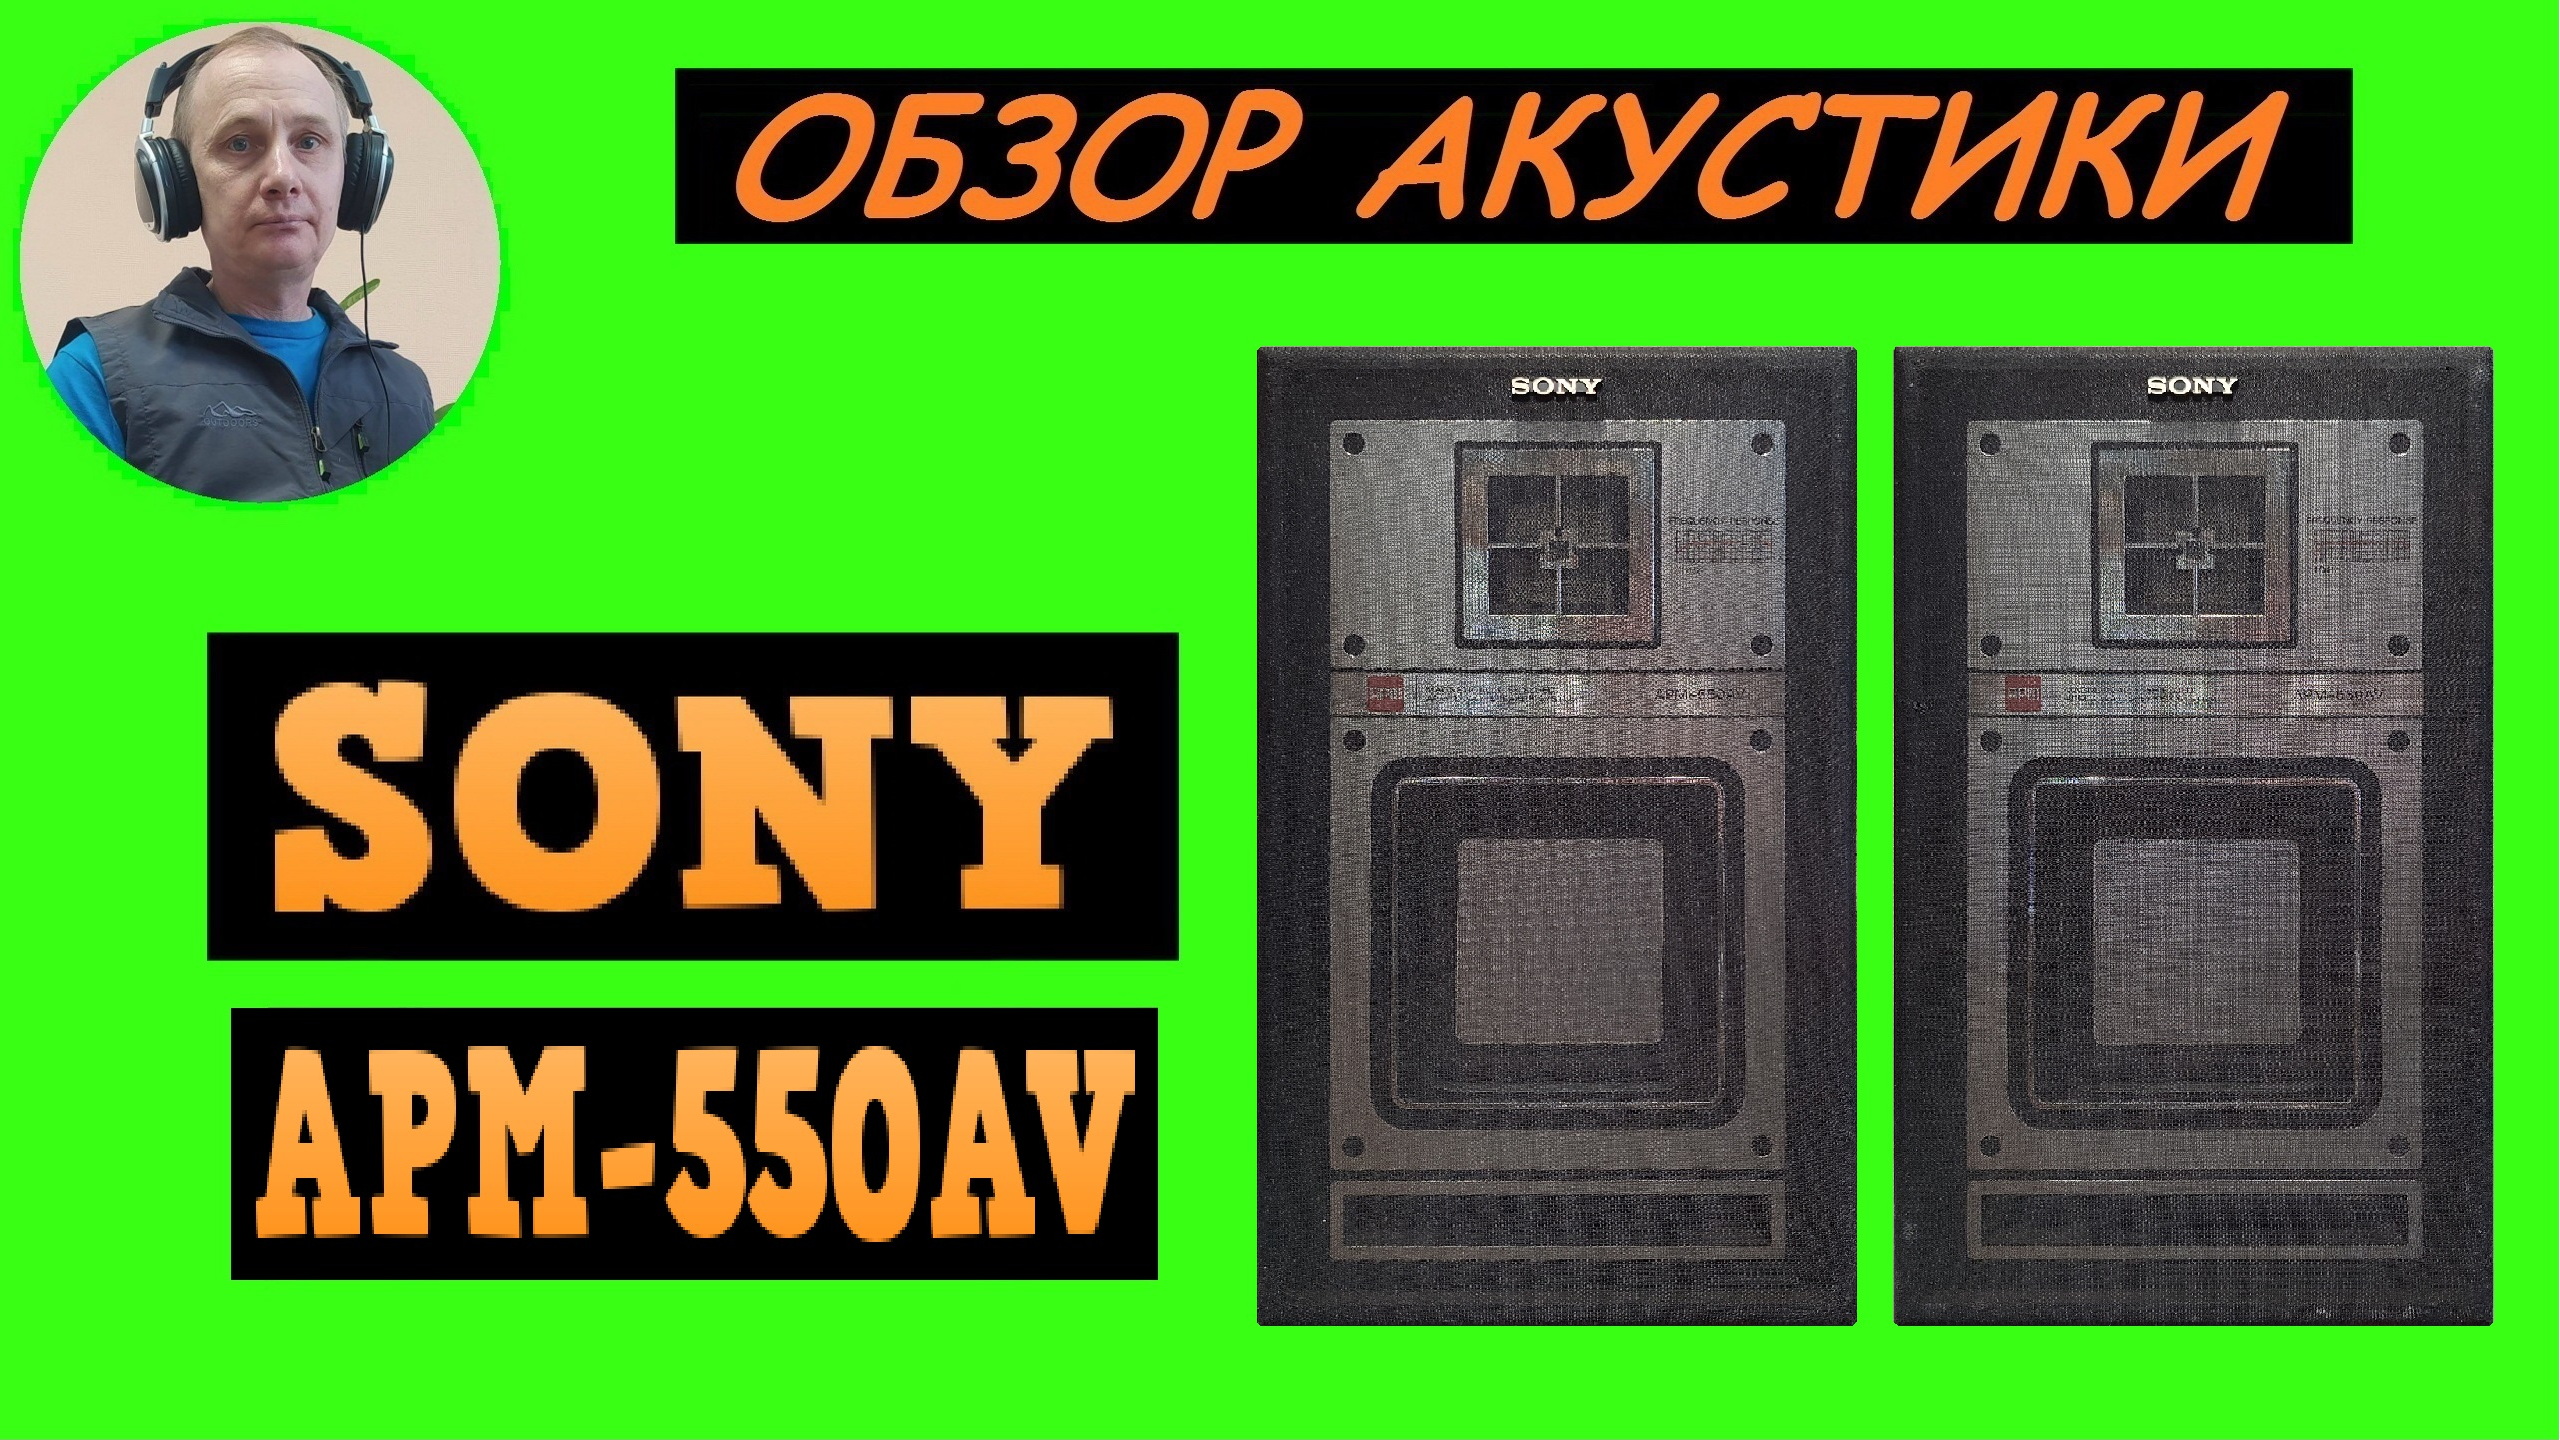 Обзор акустики SONY APM-550AV